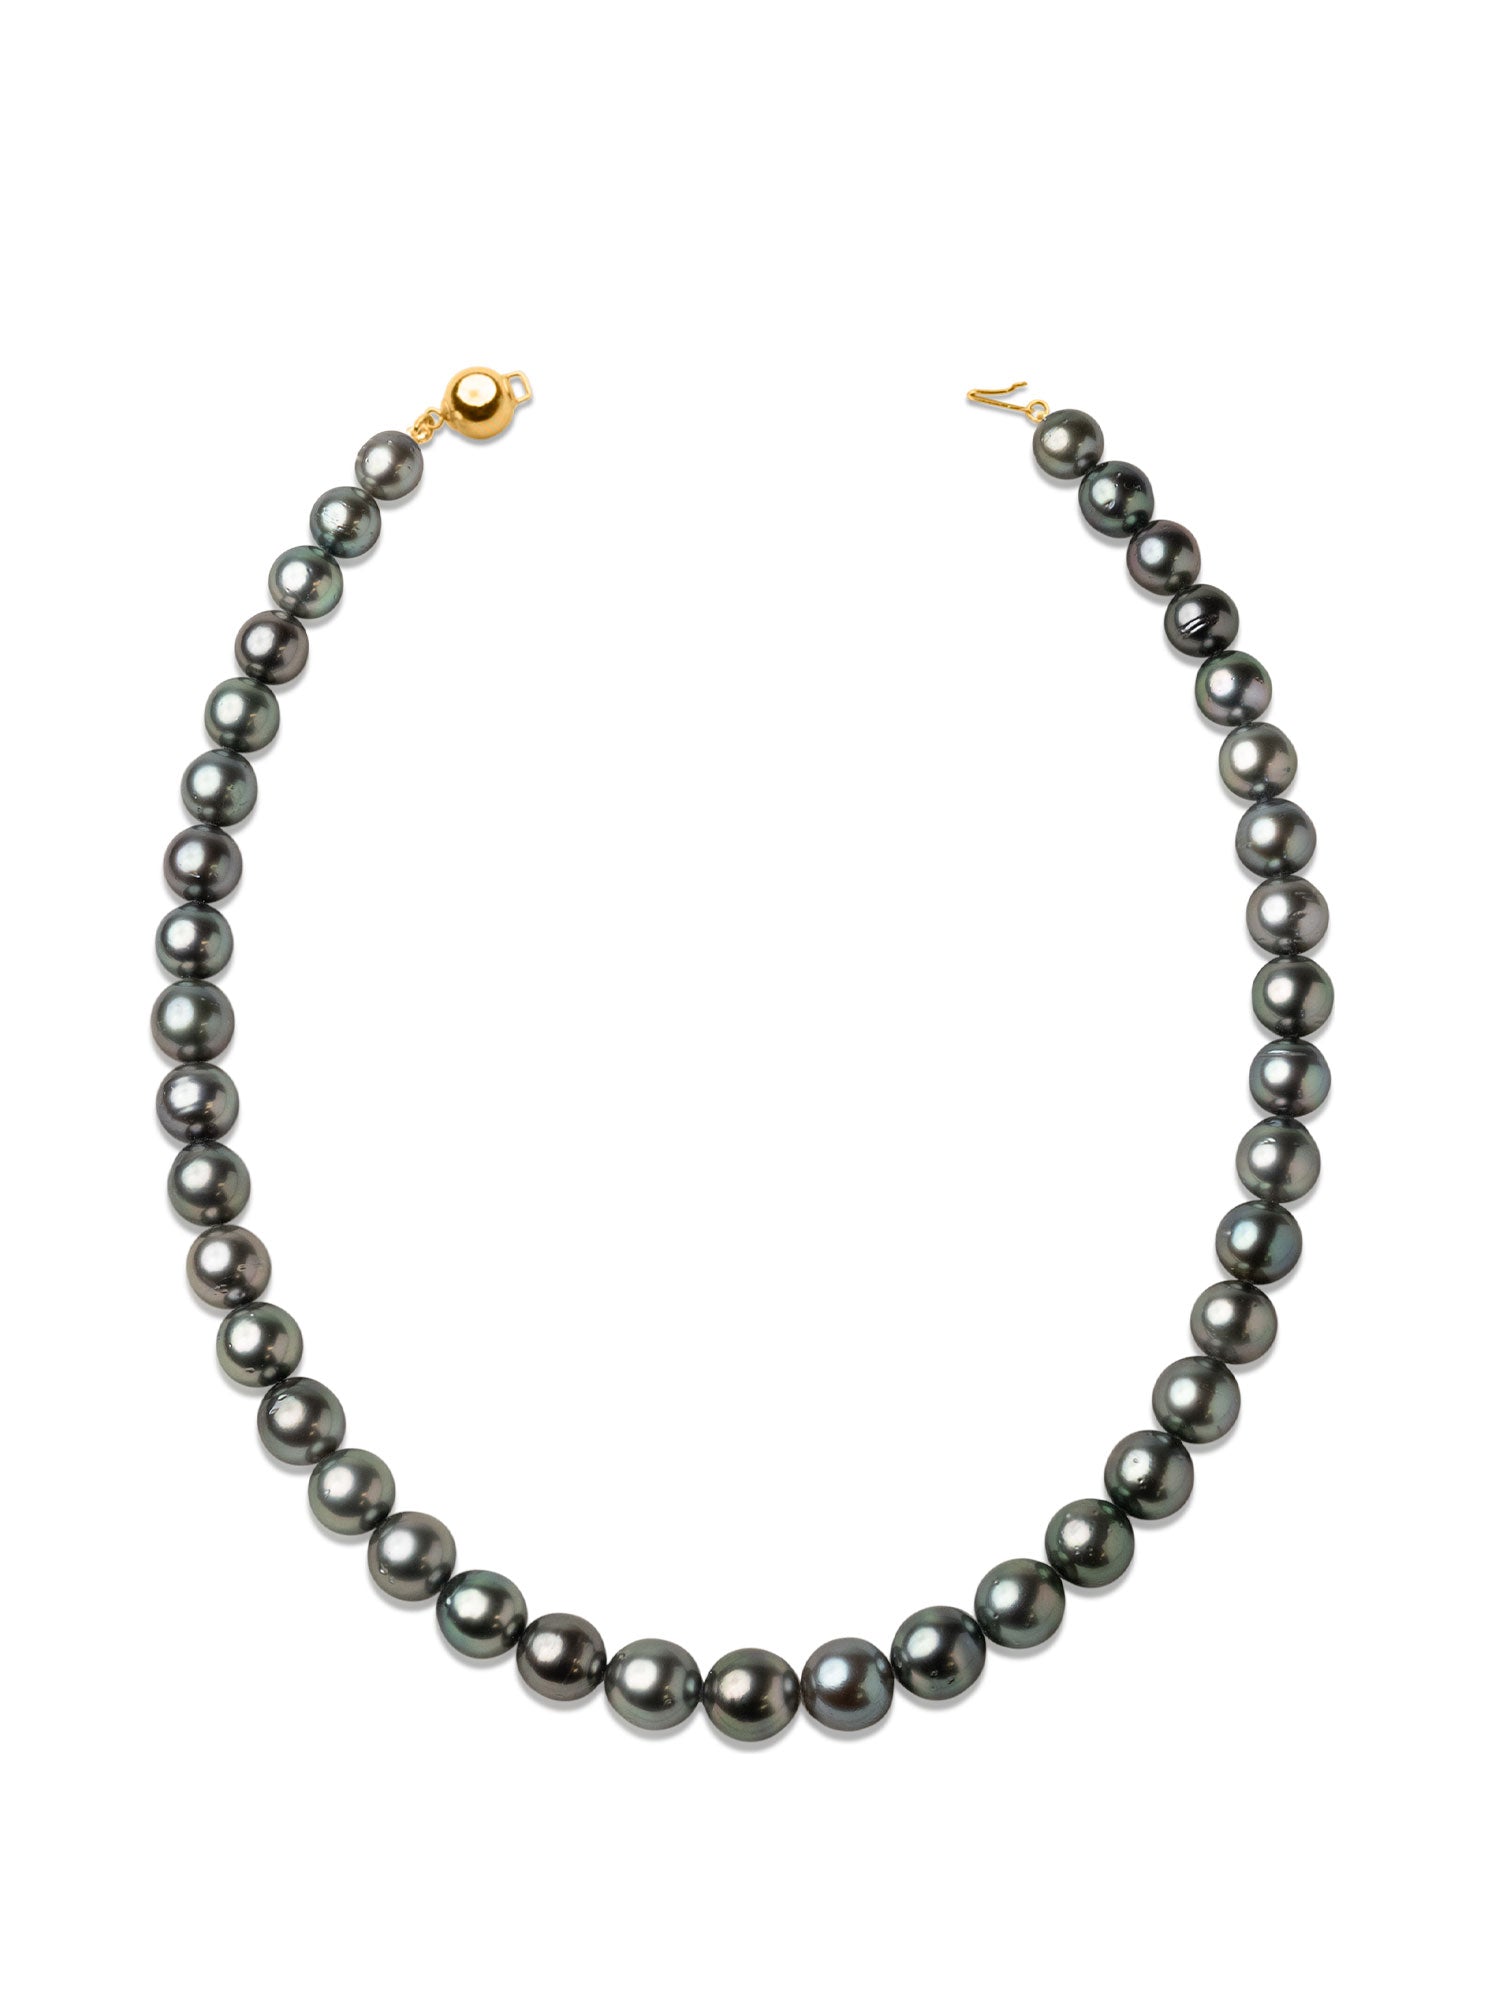 Collar de perlas cultivadas naturales Tahití redondas de 8,8 a 11,1 mm de color gris verdoso.